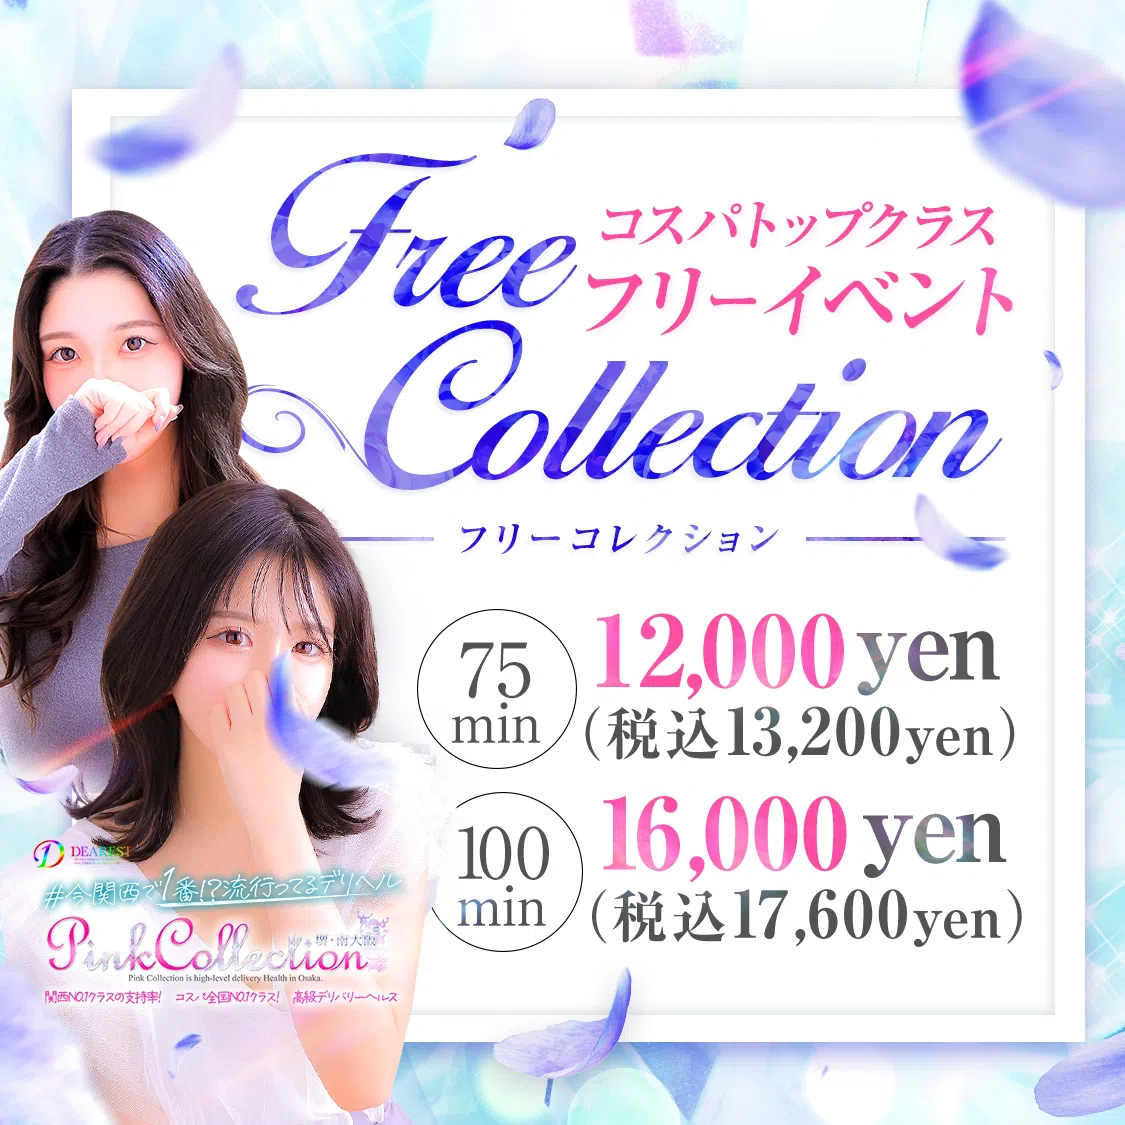 Pink Collection 堺・南大阪店～ピンクコレクション～